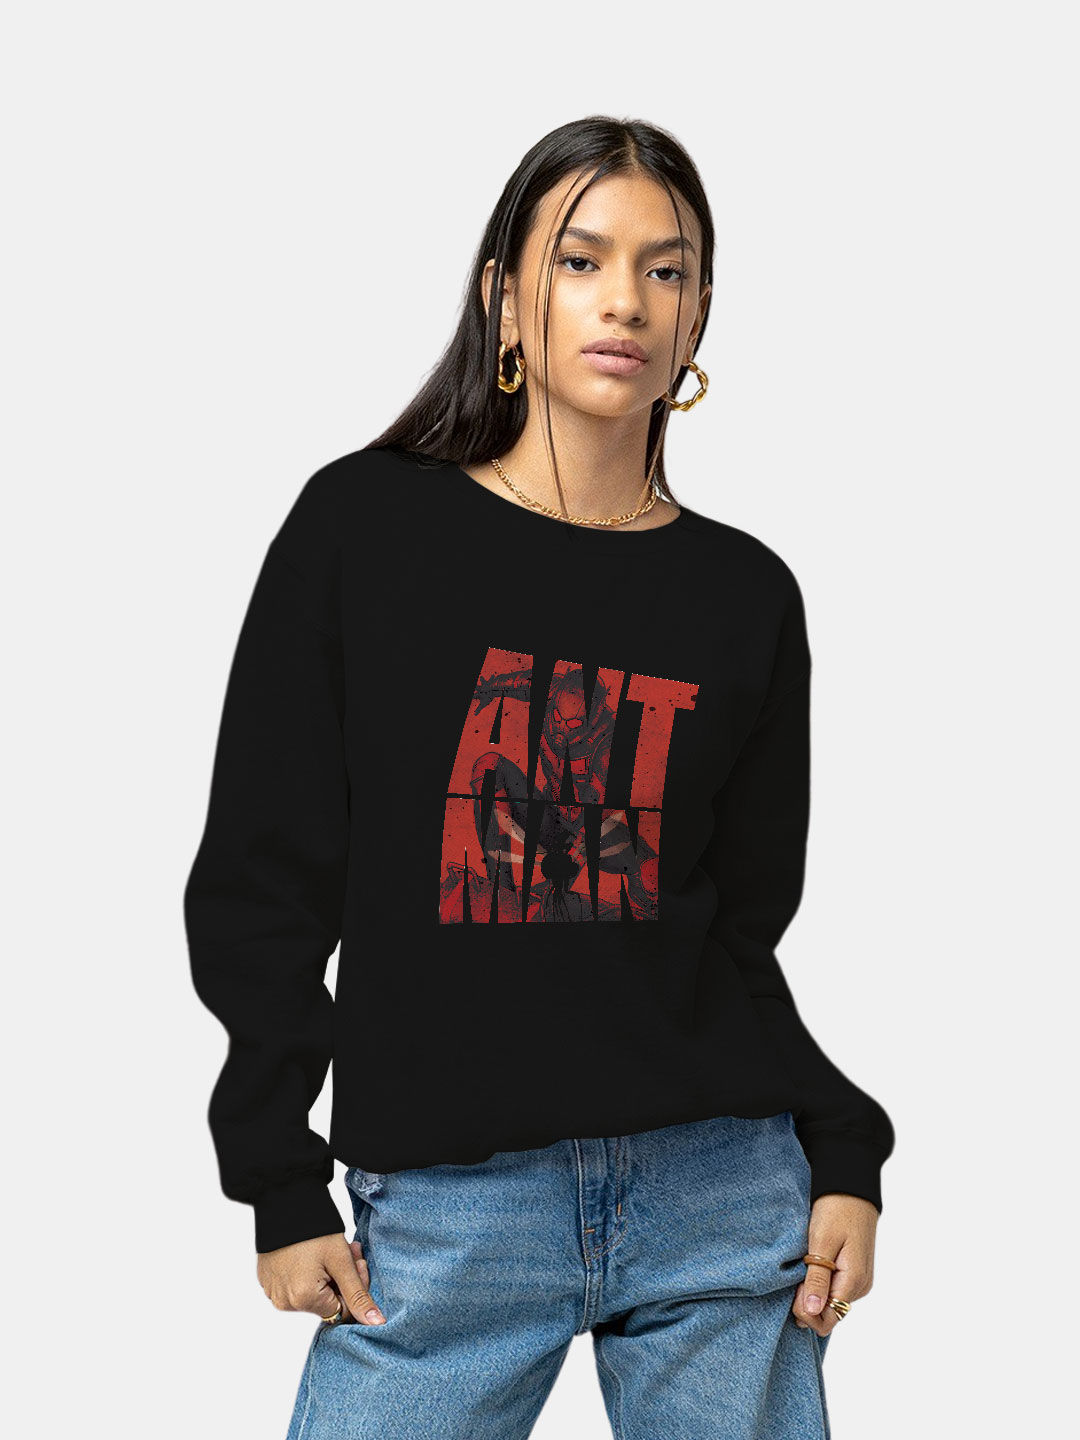 Buy Ant-Man Badge - Female Designer Sweatshirt Sweatshirts Online